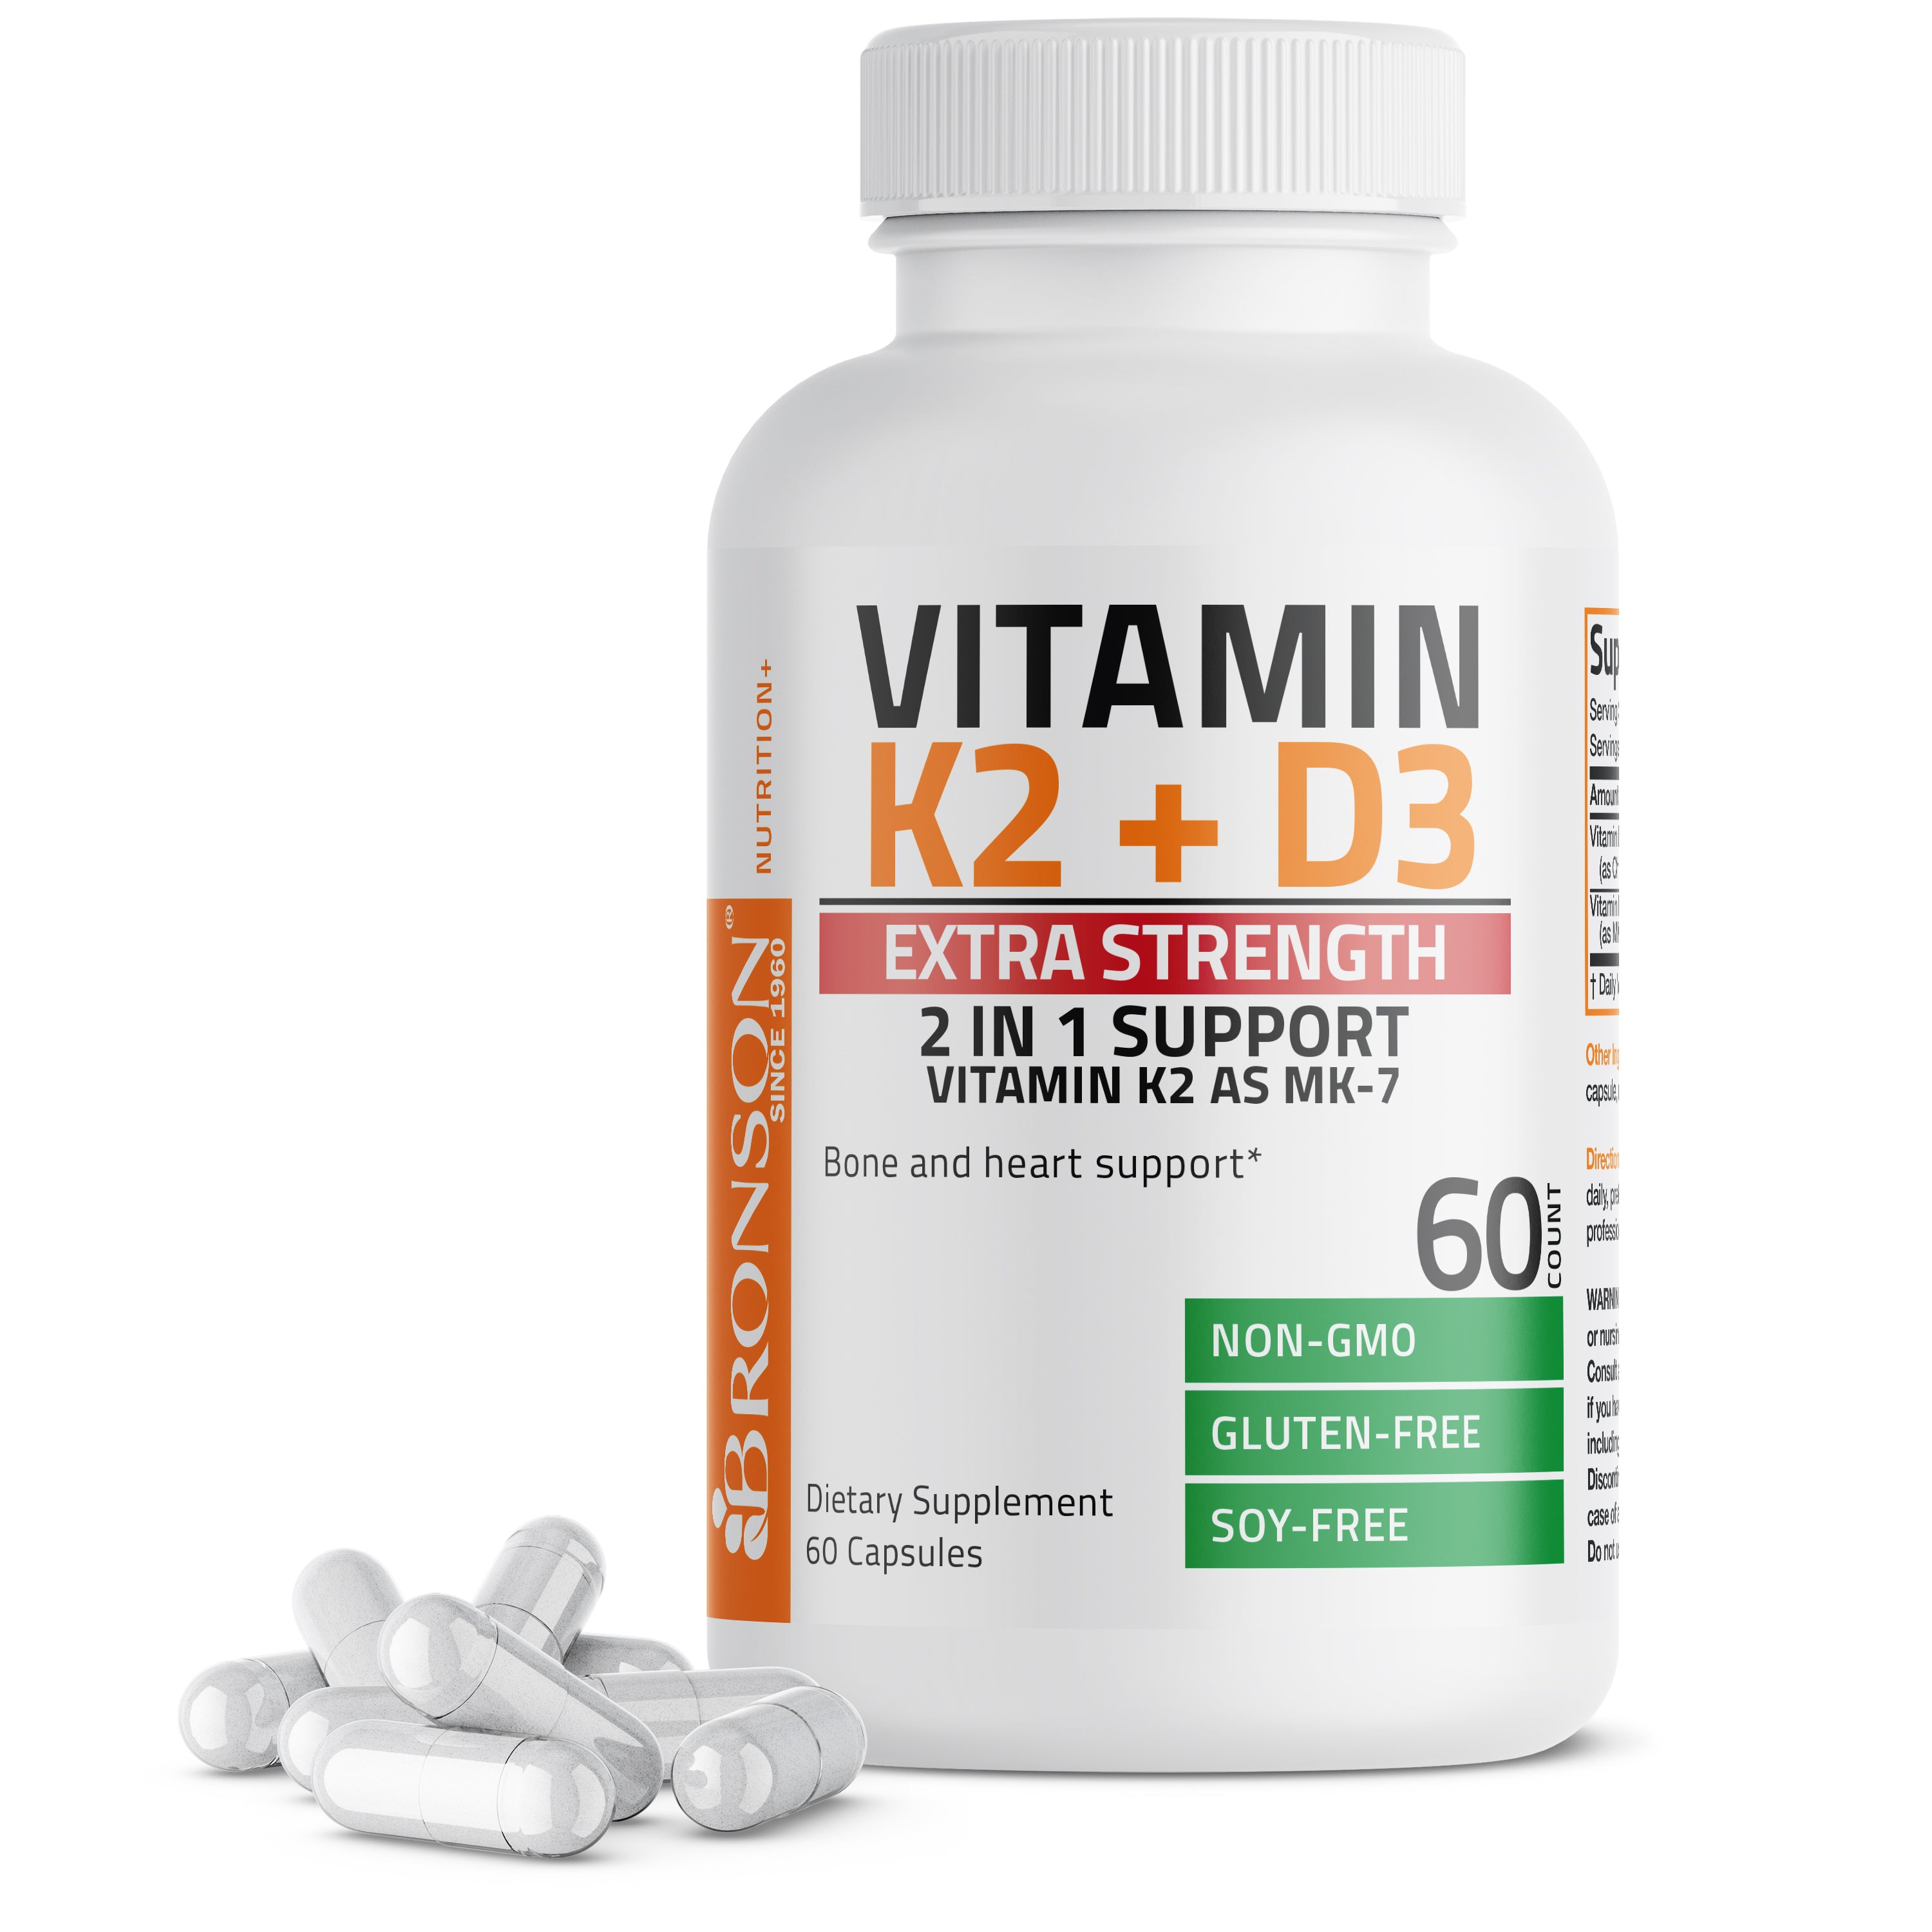 Vitamin K2 MK-7 Plus Vitamin D3 Extra Strength view 1 of 12